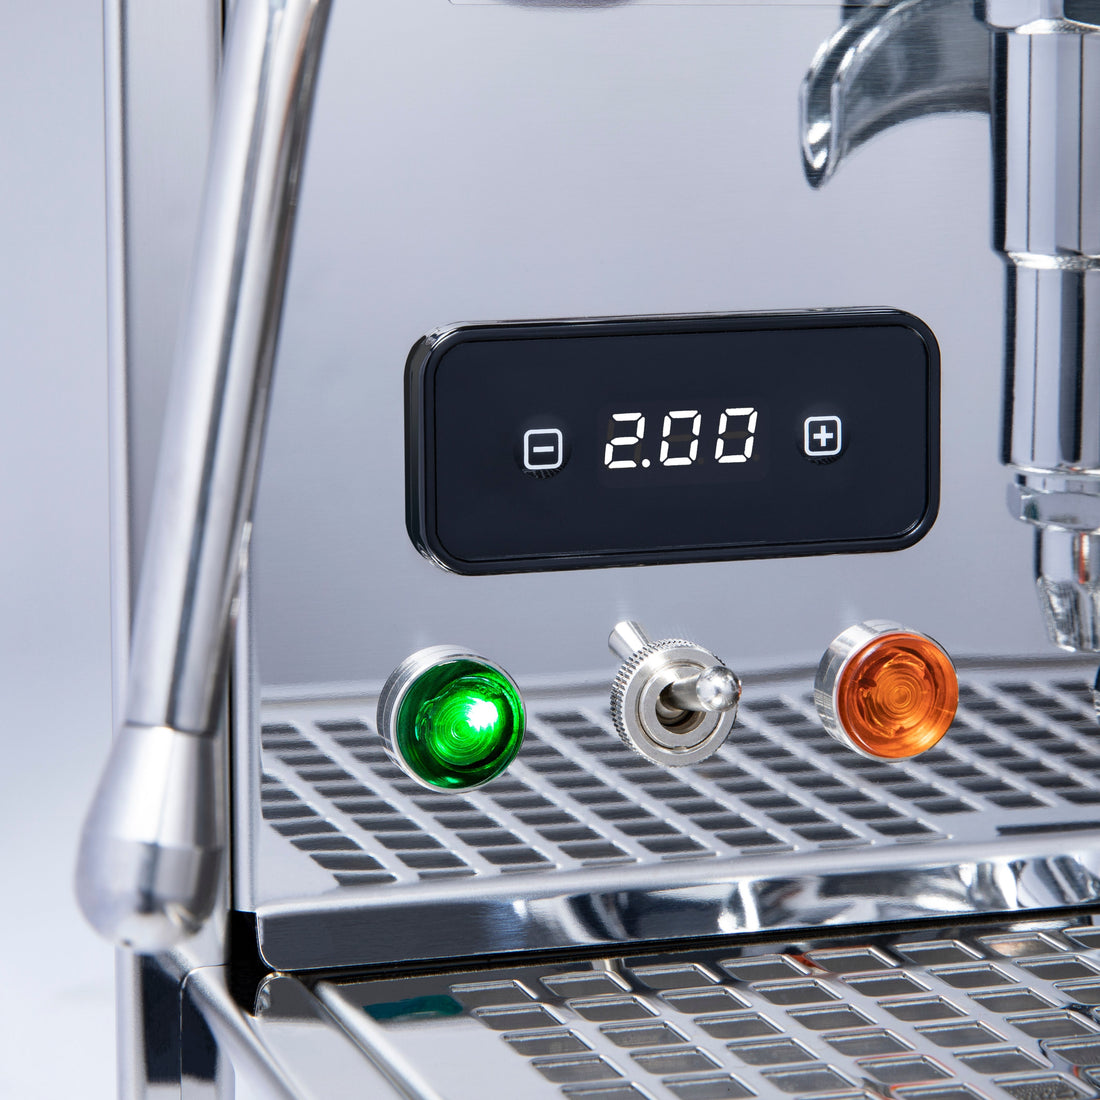 Profitec Pro 500 PID Espresso Machine with Flow Control with Tiger Maple Accents